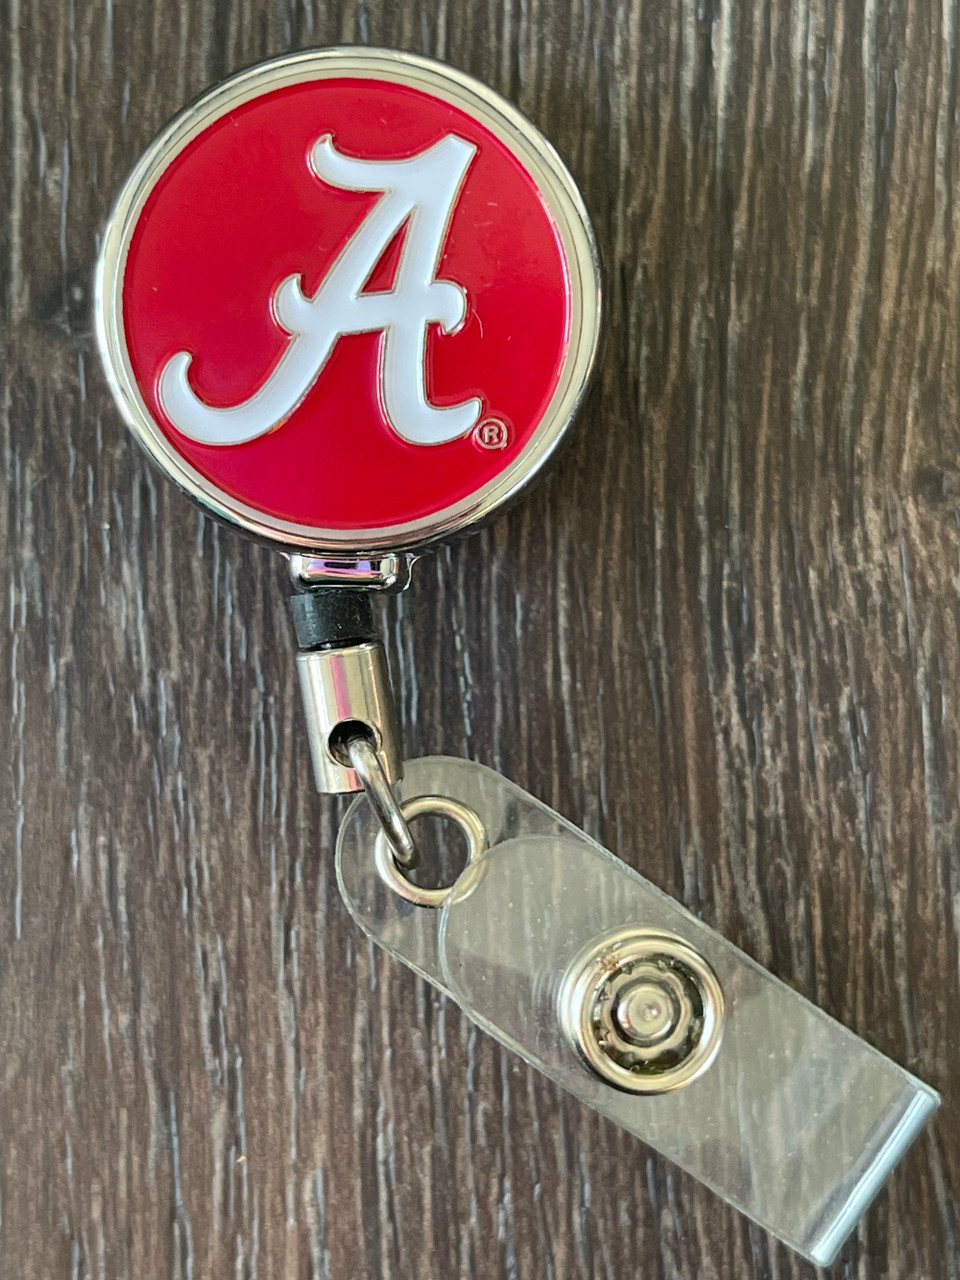 University of Alabama Red Retractable Badge Reel